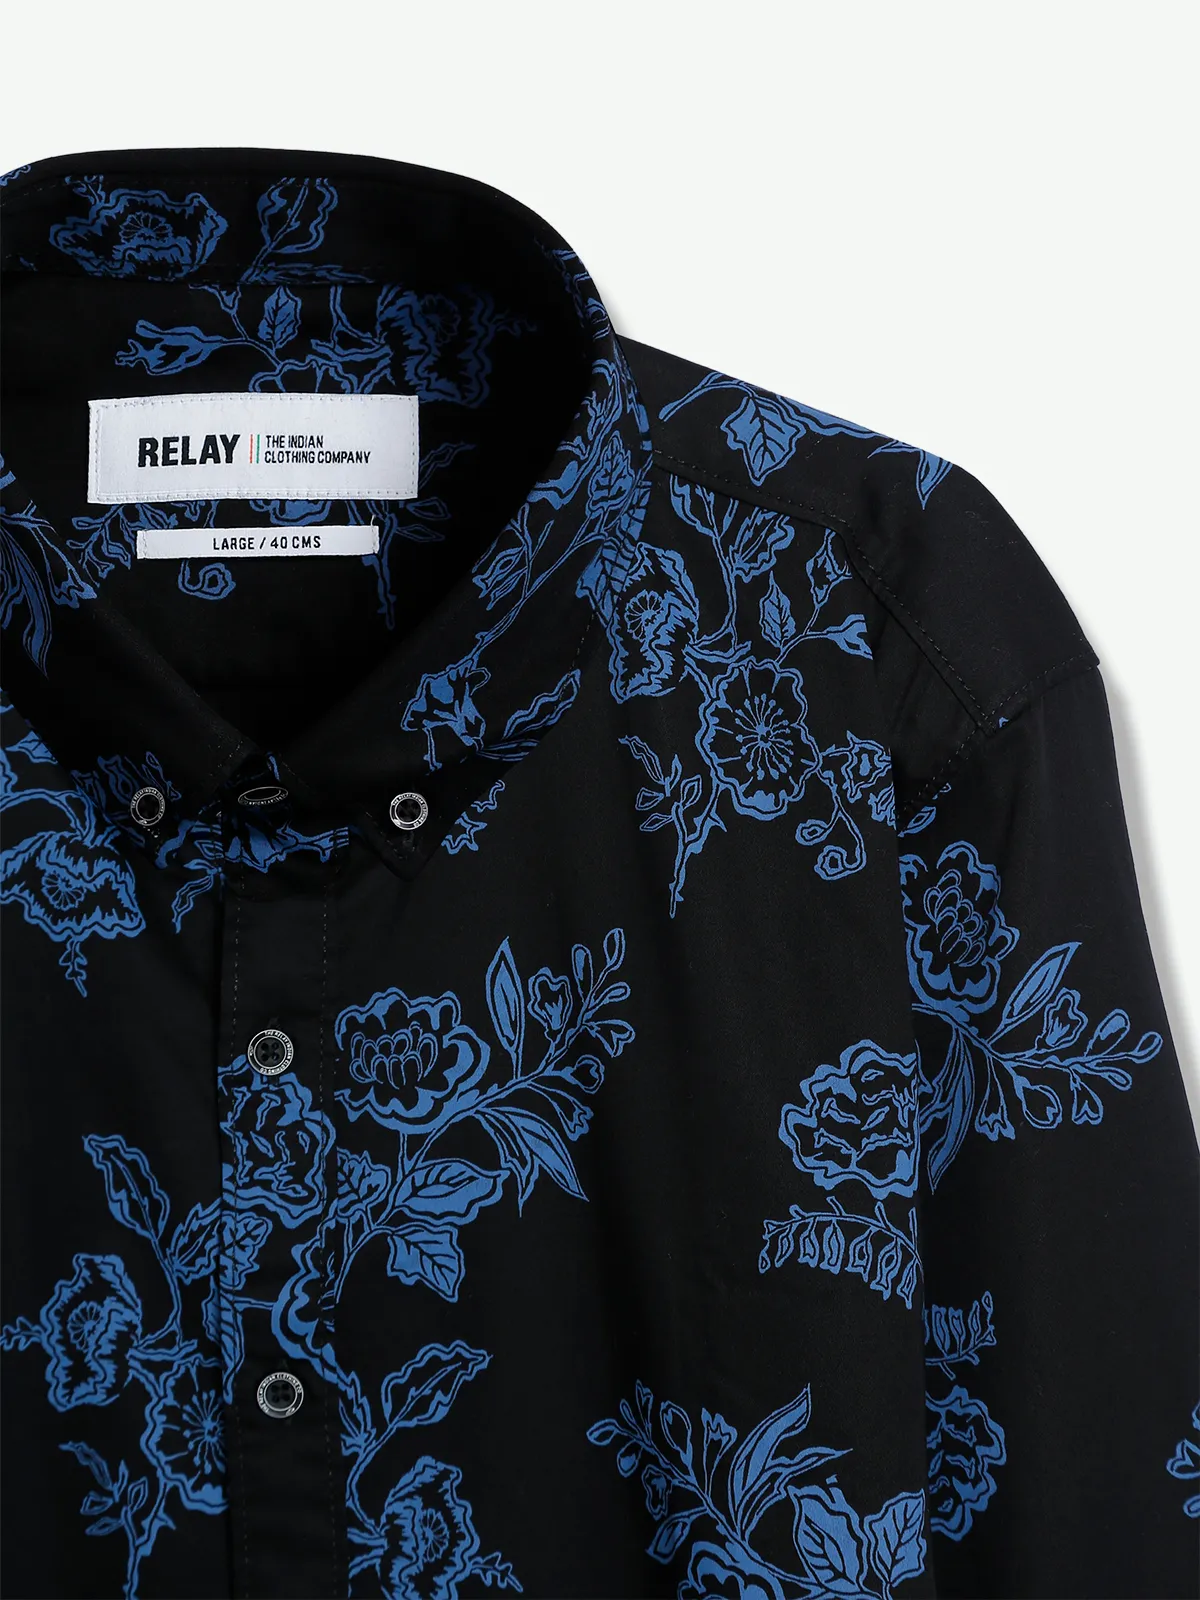 Relay printed black cotton shirt